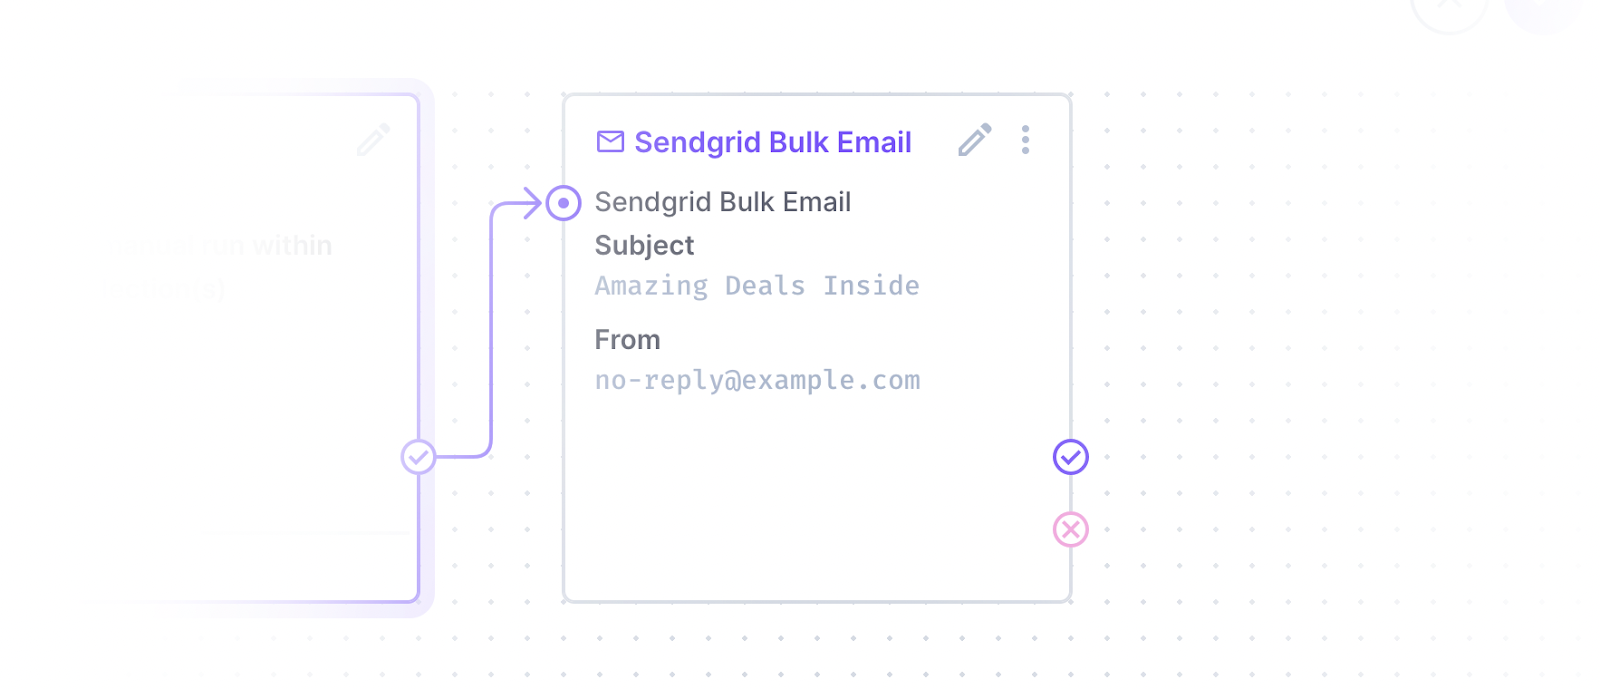 A SendGrid Bulk Email operation in a Flow